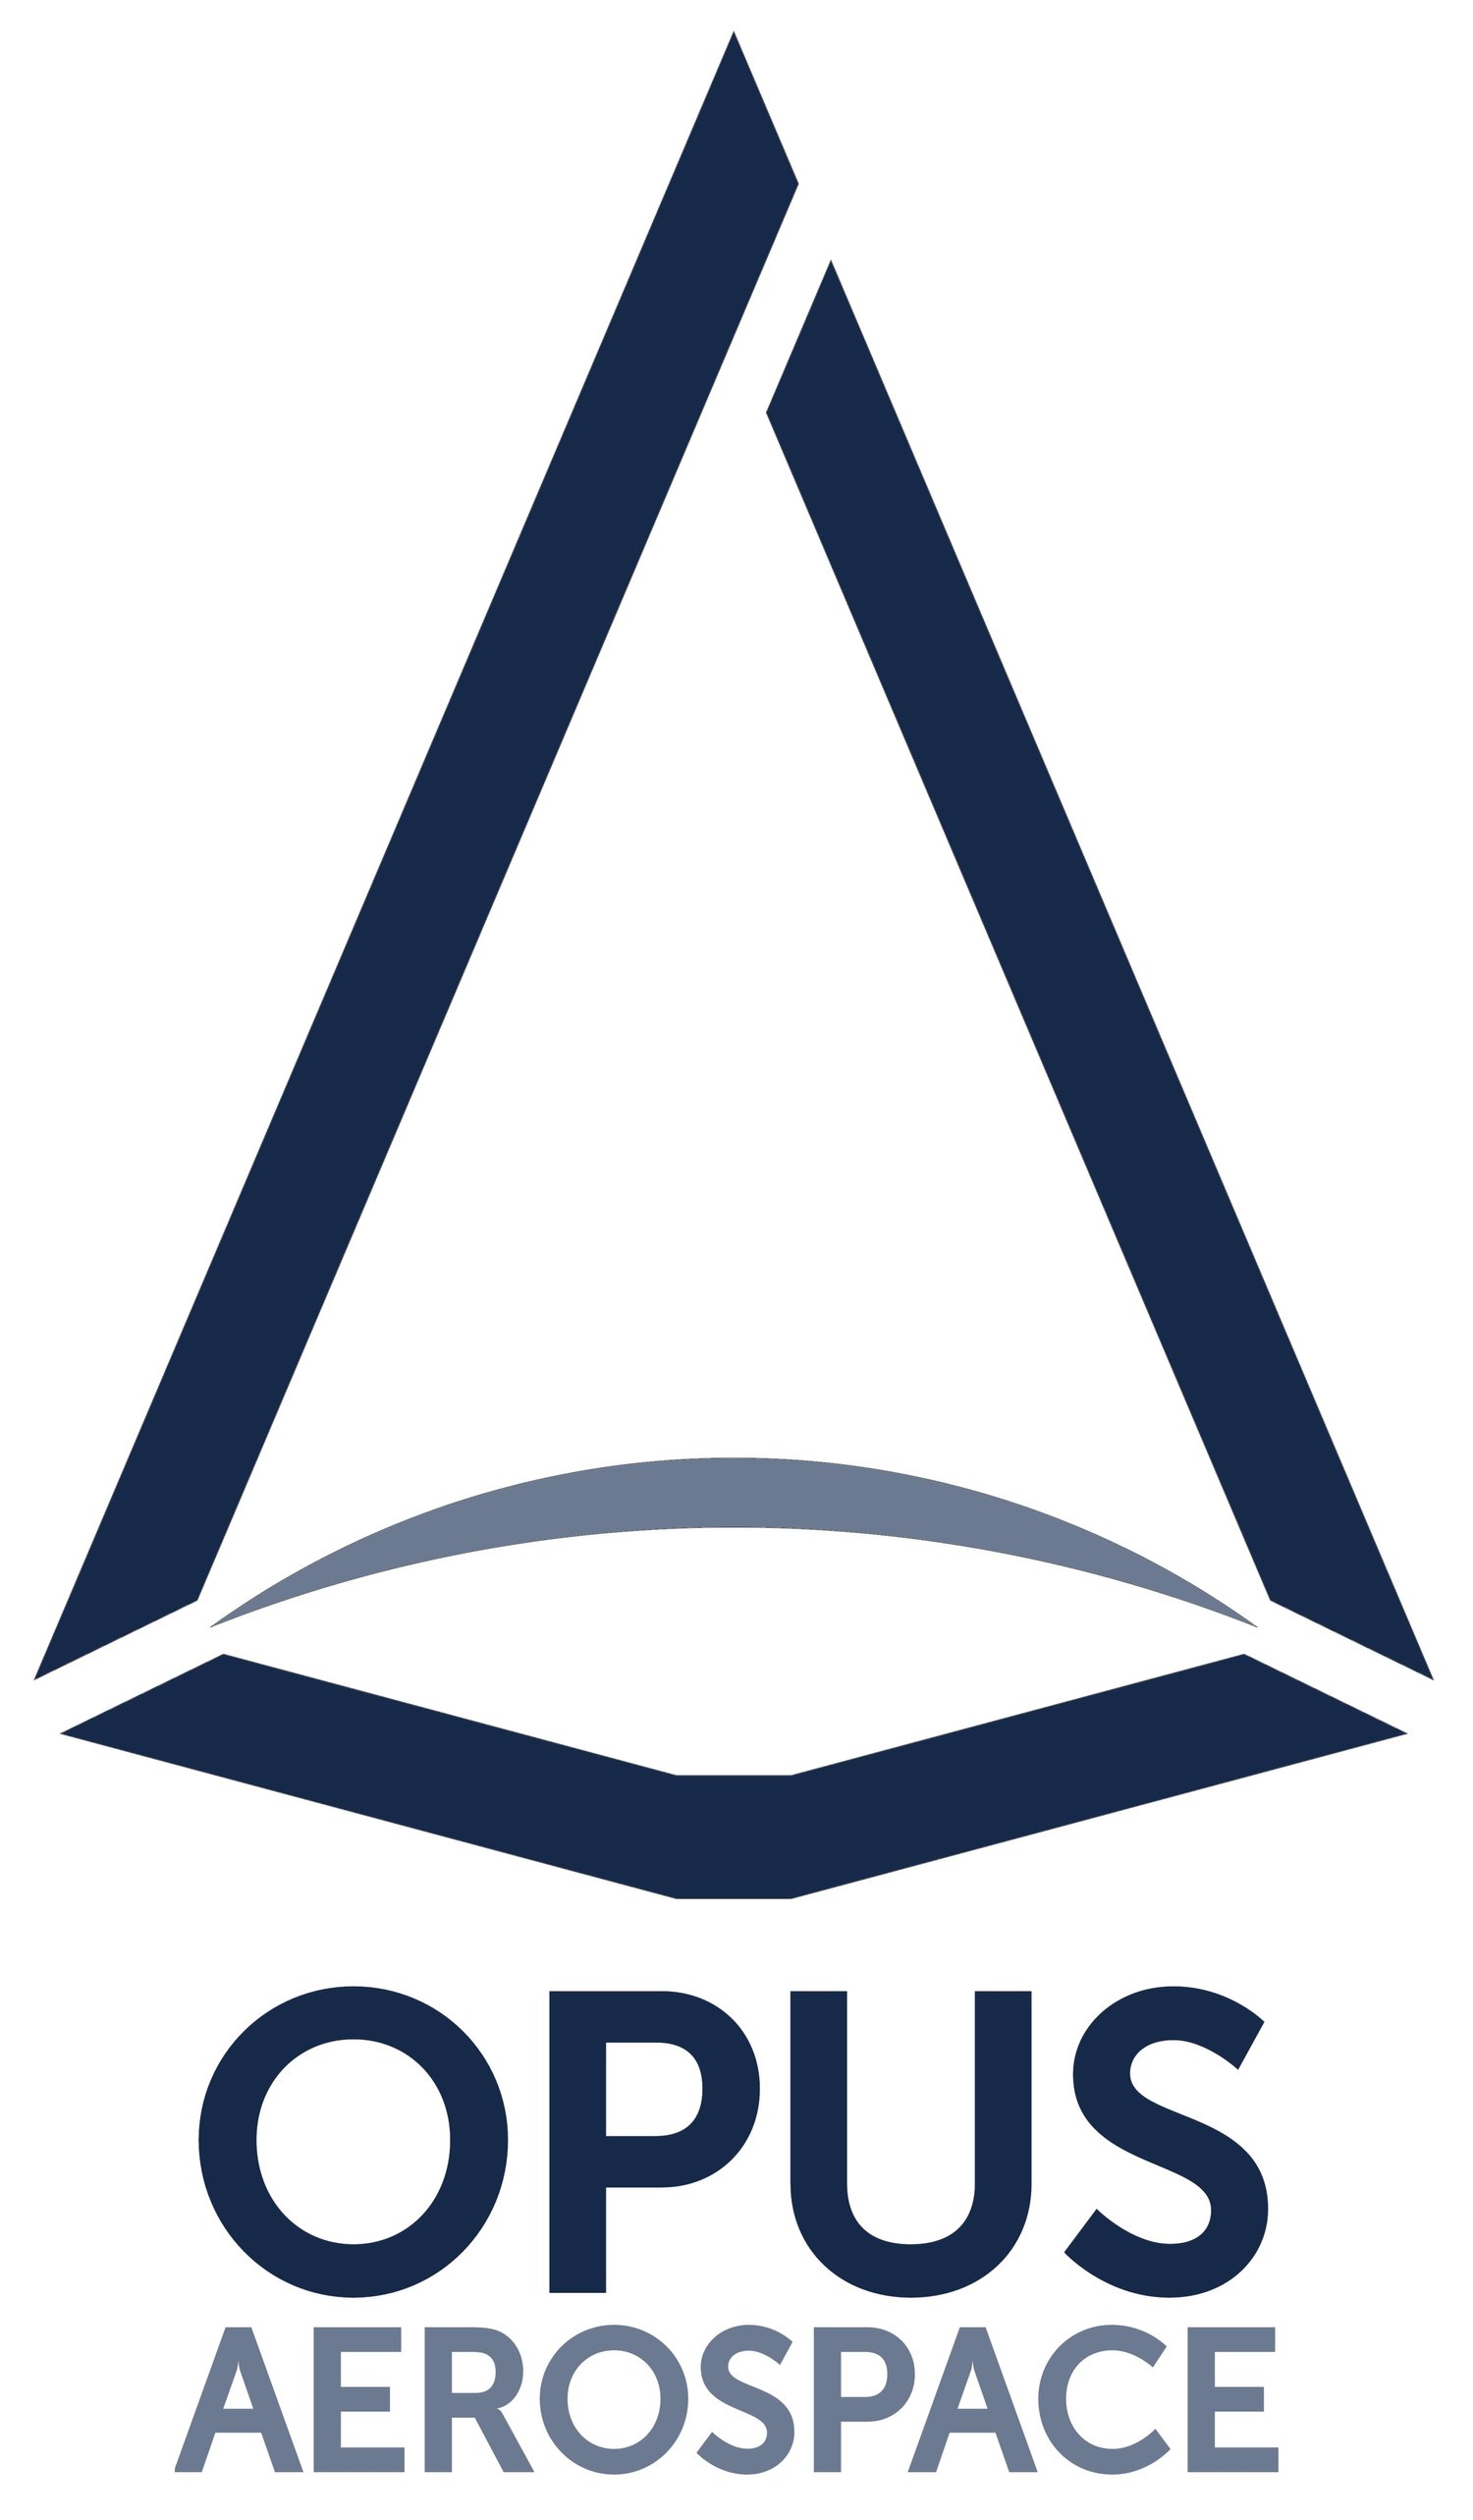 Opus Aerospace logo